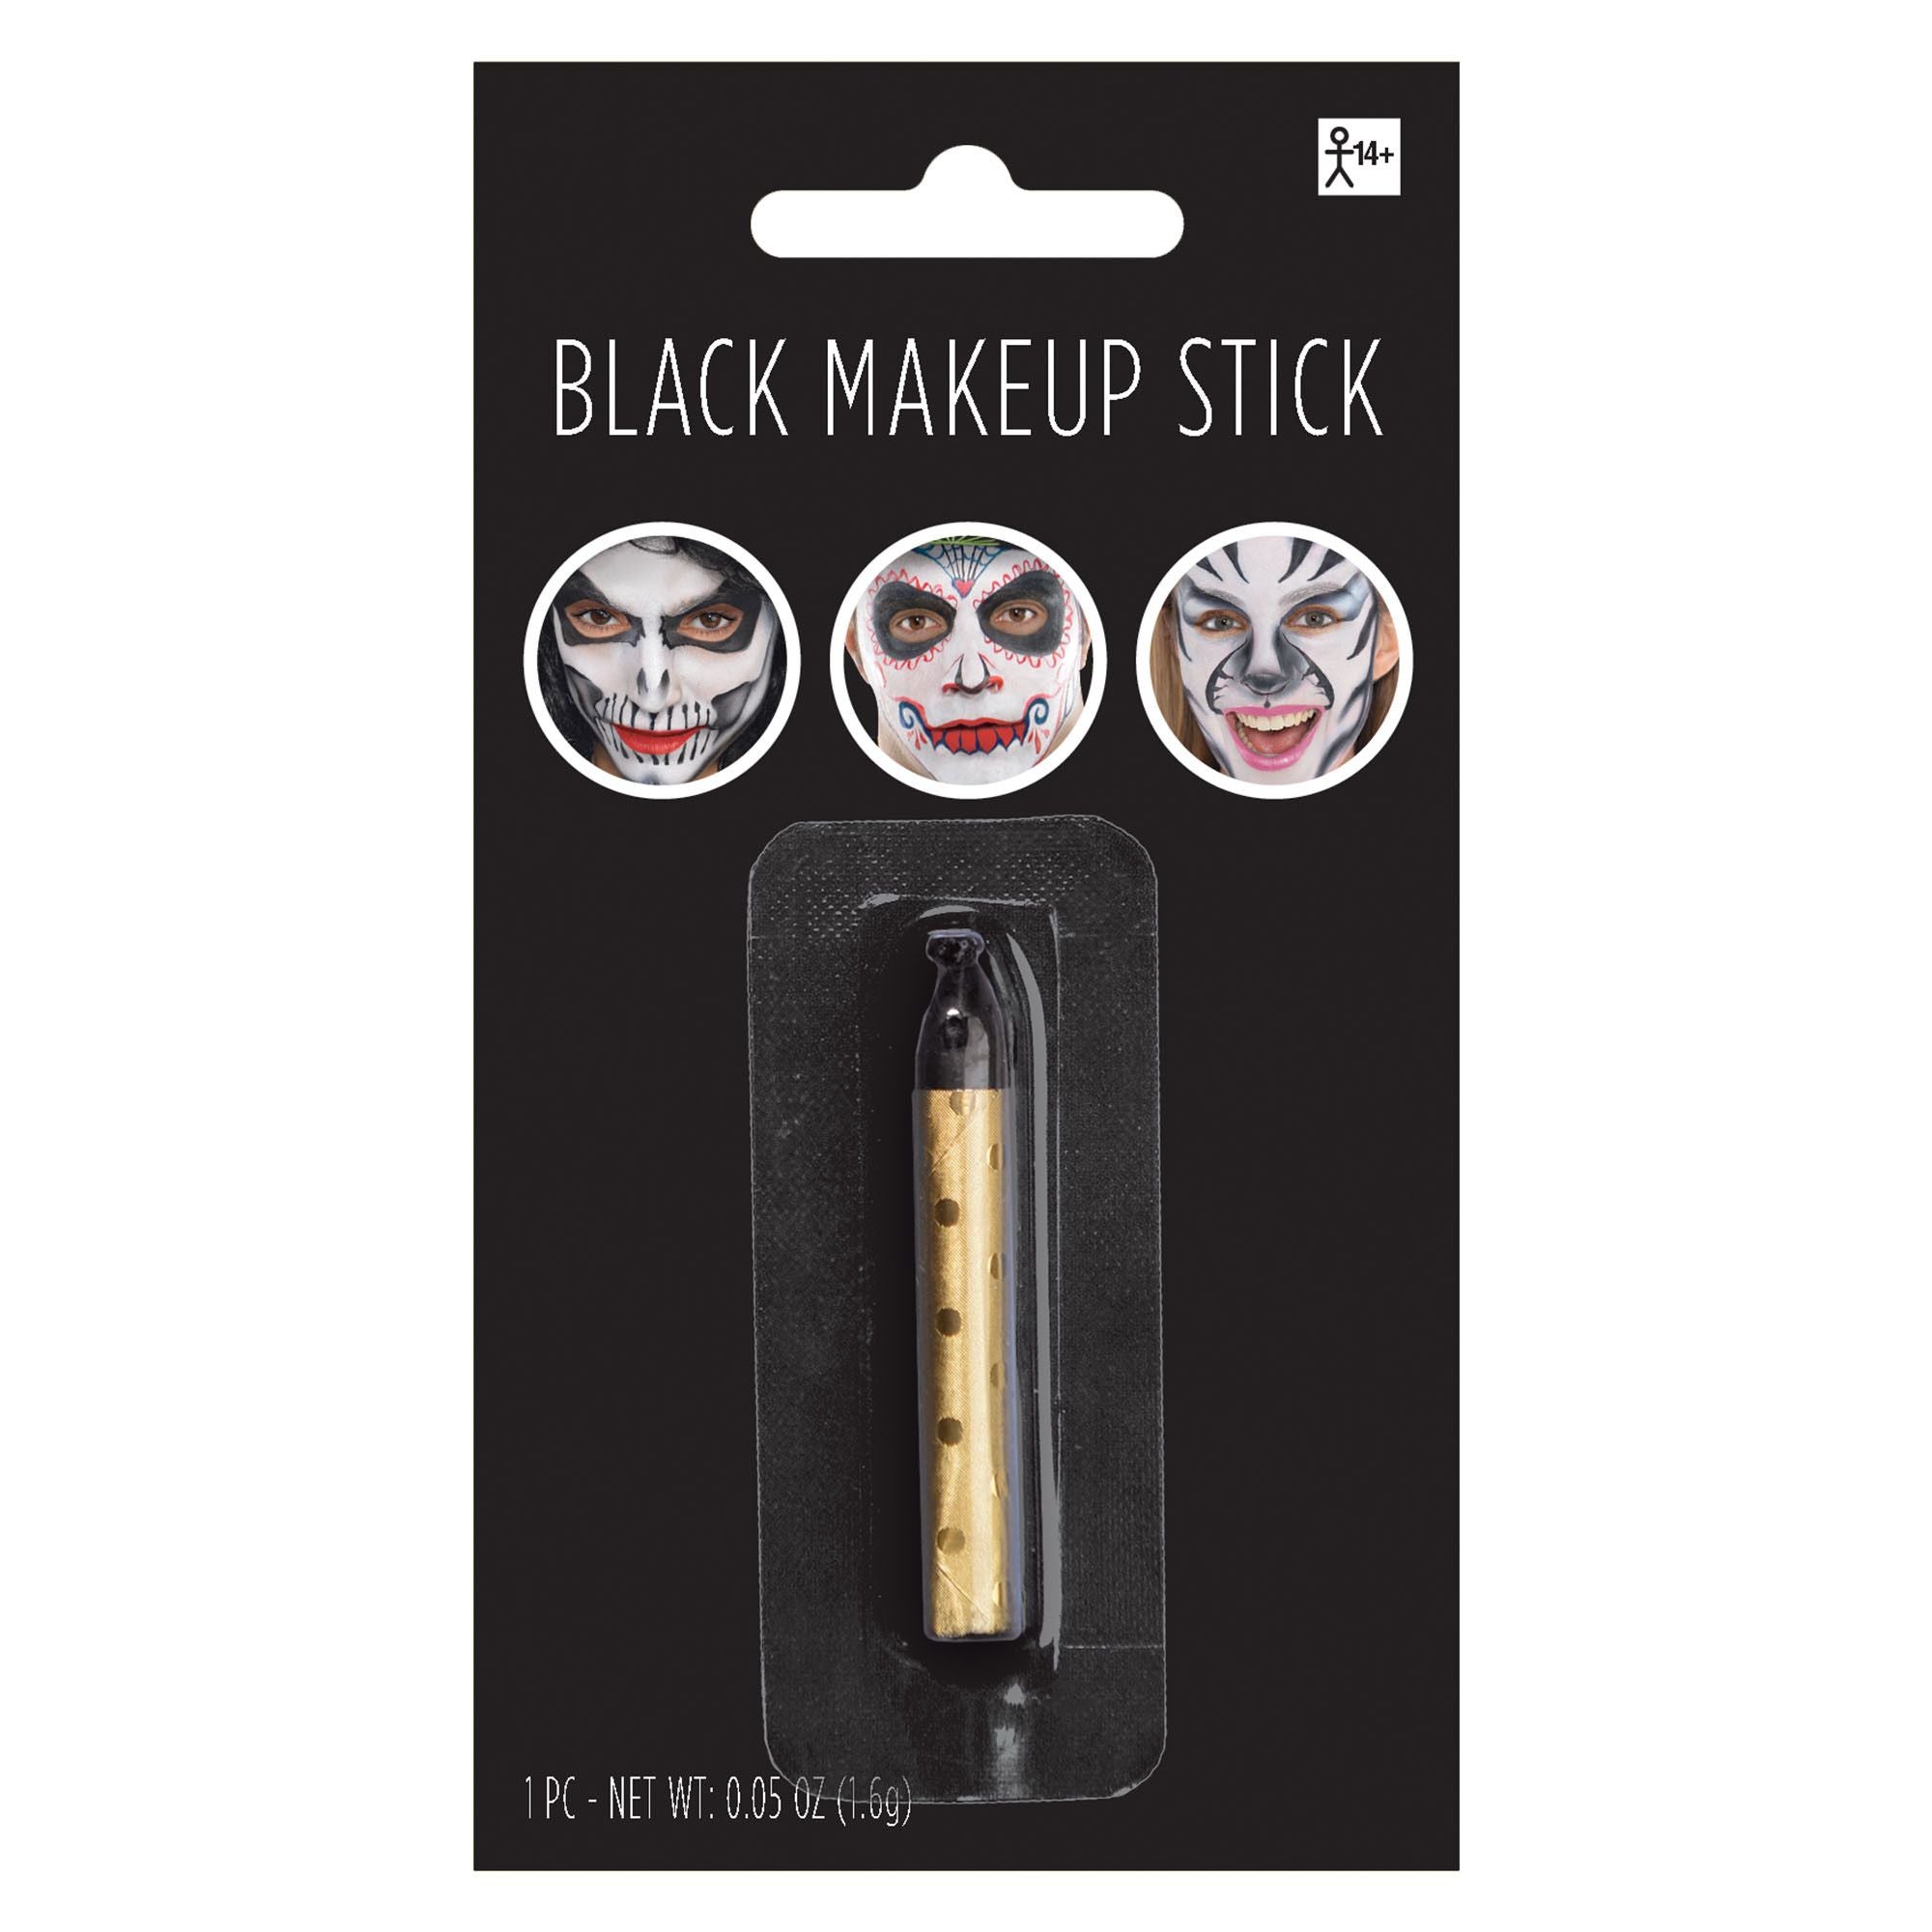 Rubies COSTUMES: MAKE-UP Black Makeup Stick